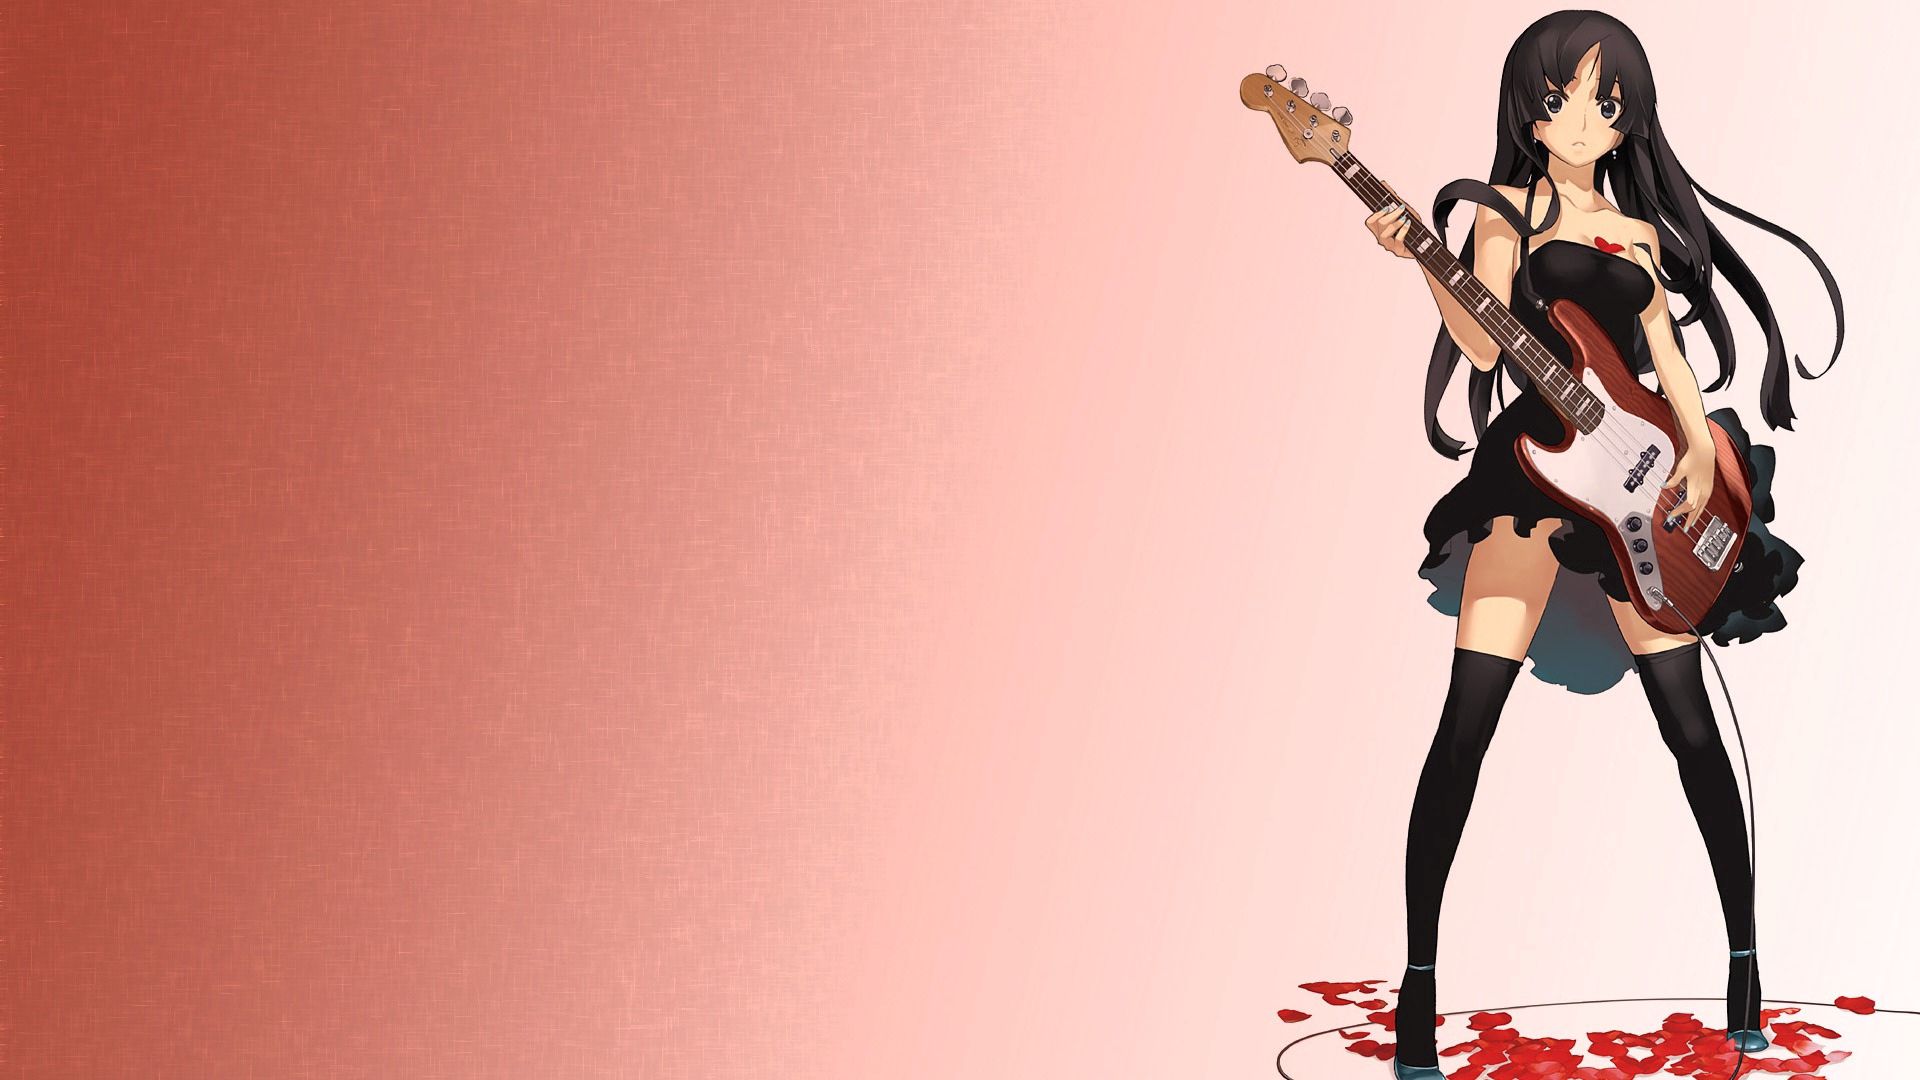 1920x1080 Background anime, guitar, rock, girl, musician